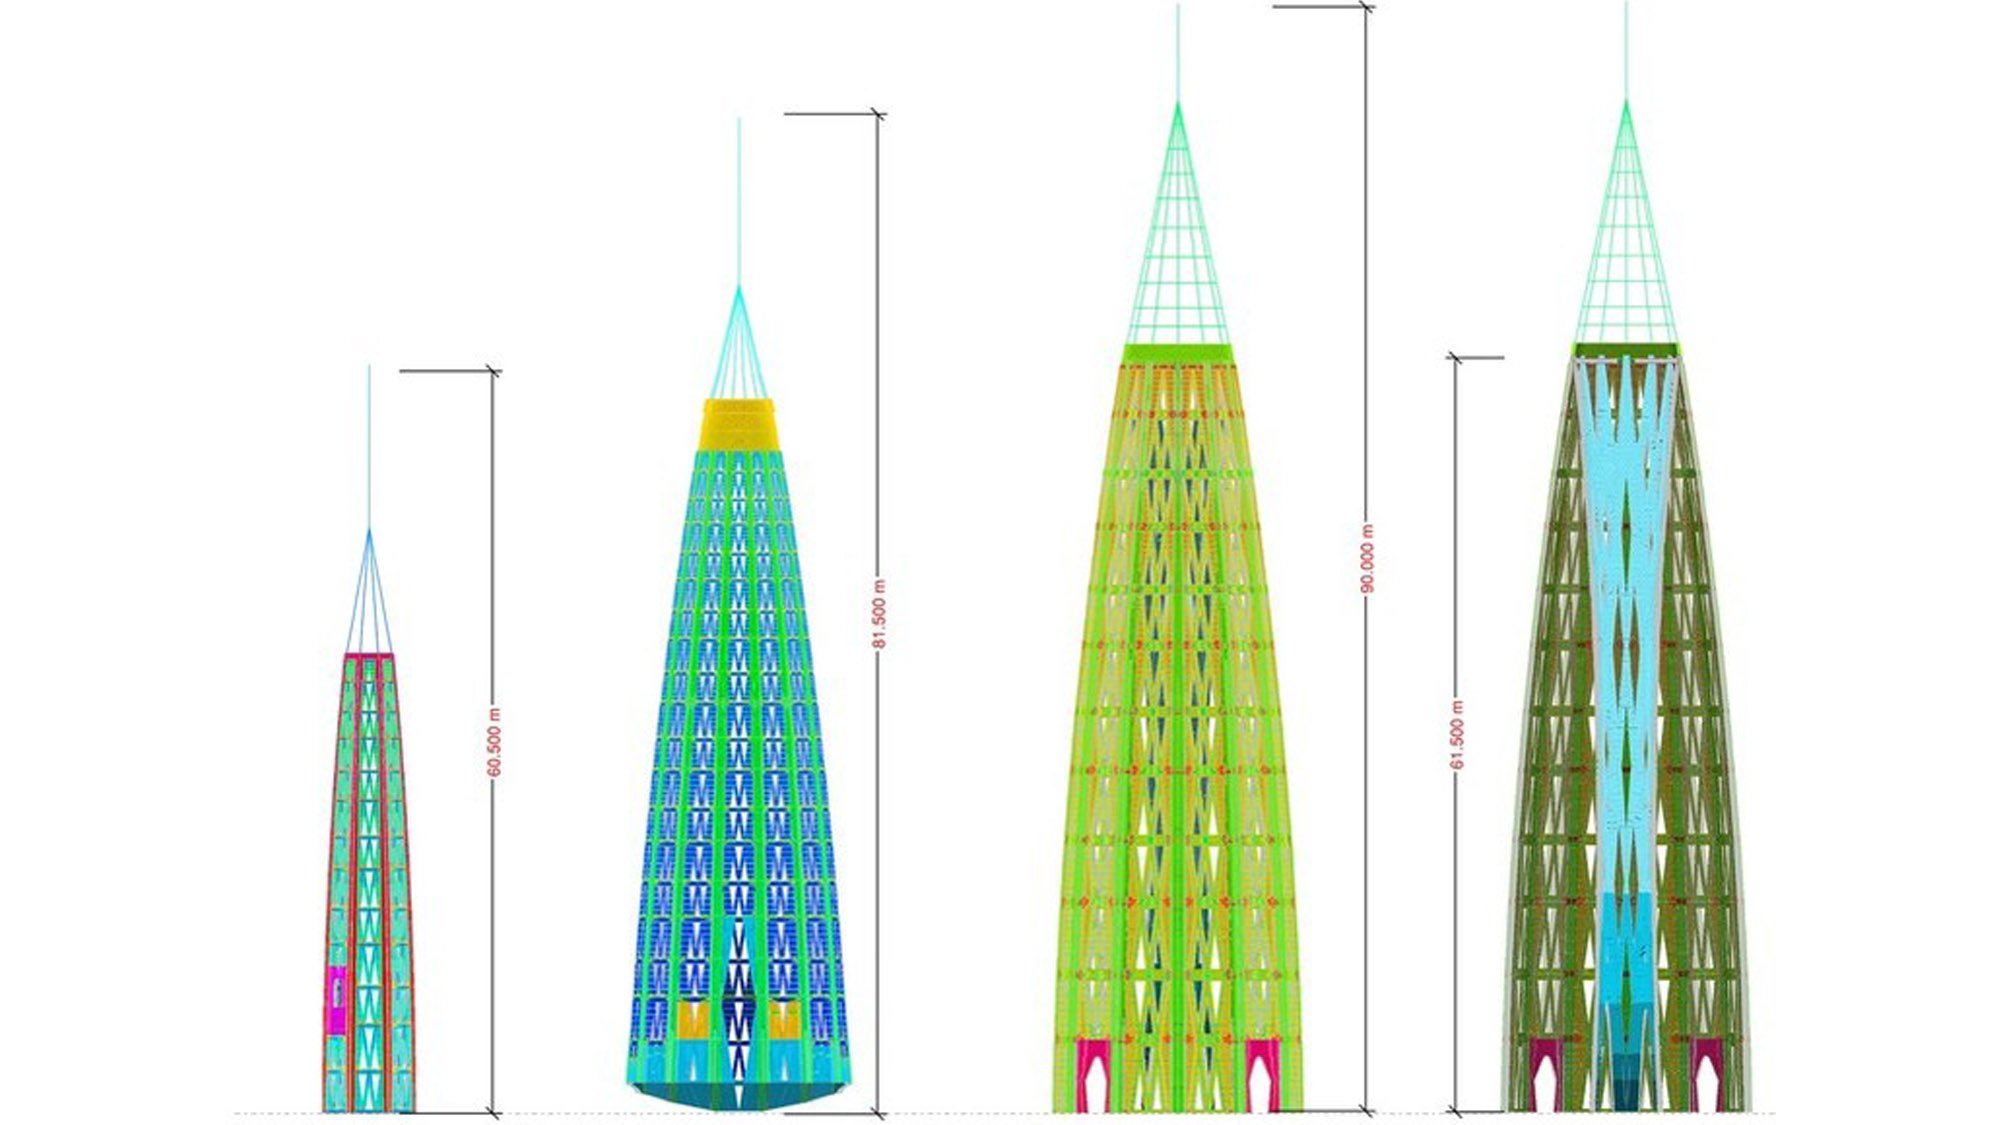 Sagrada Familia Mary's Tower design. Credit: Arup.